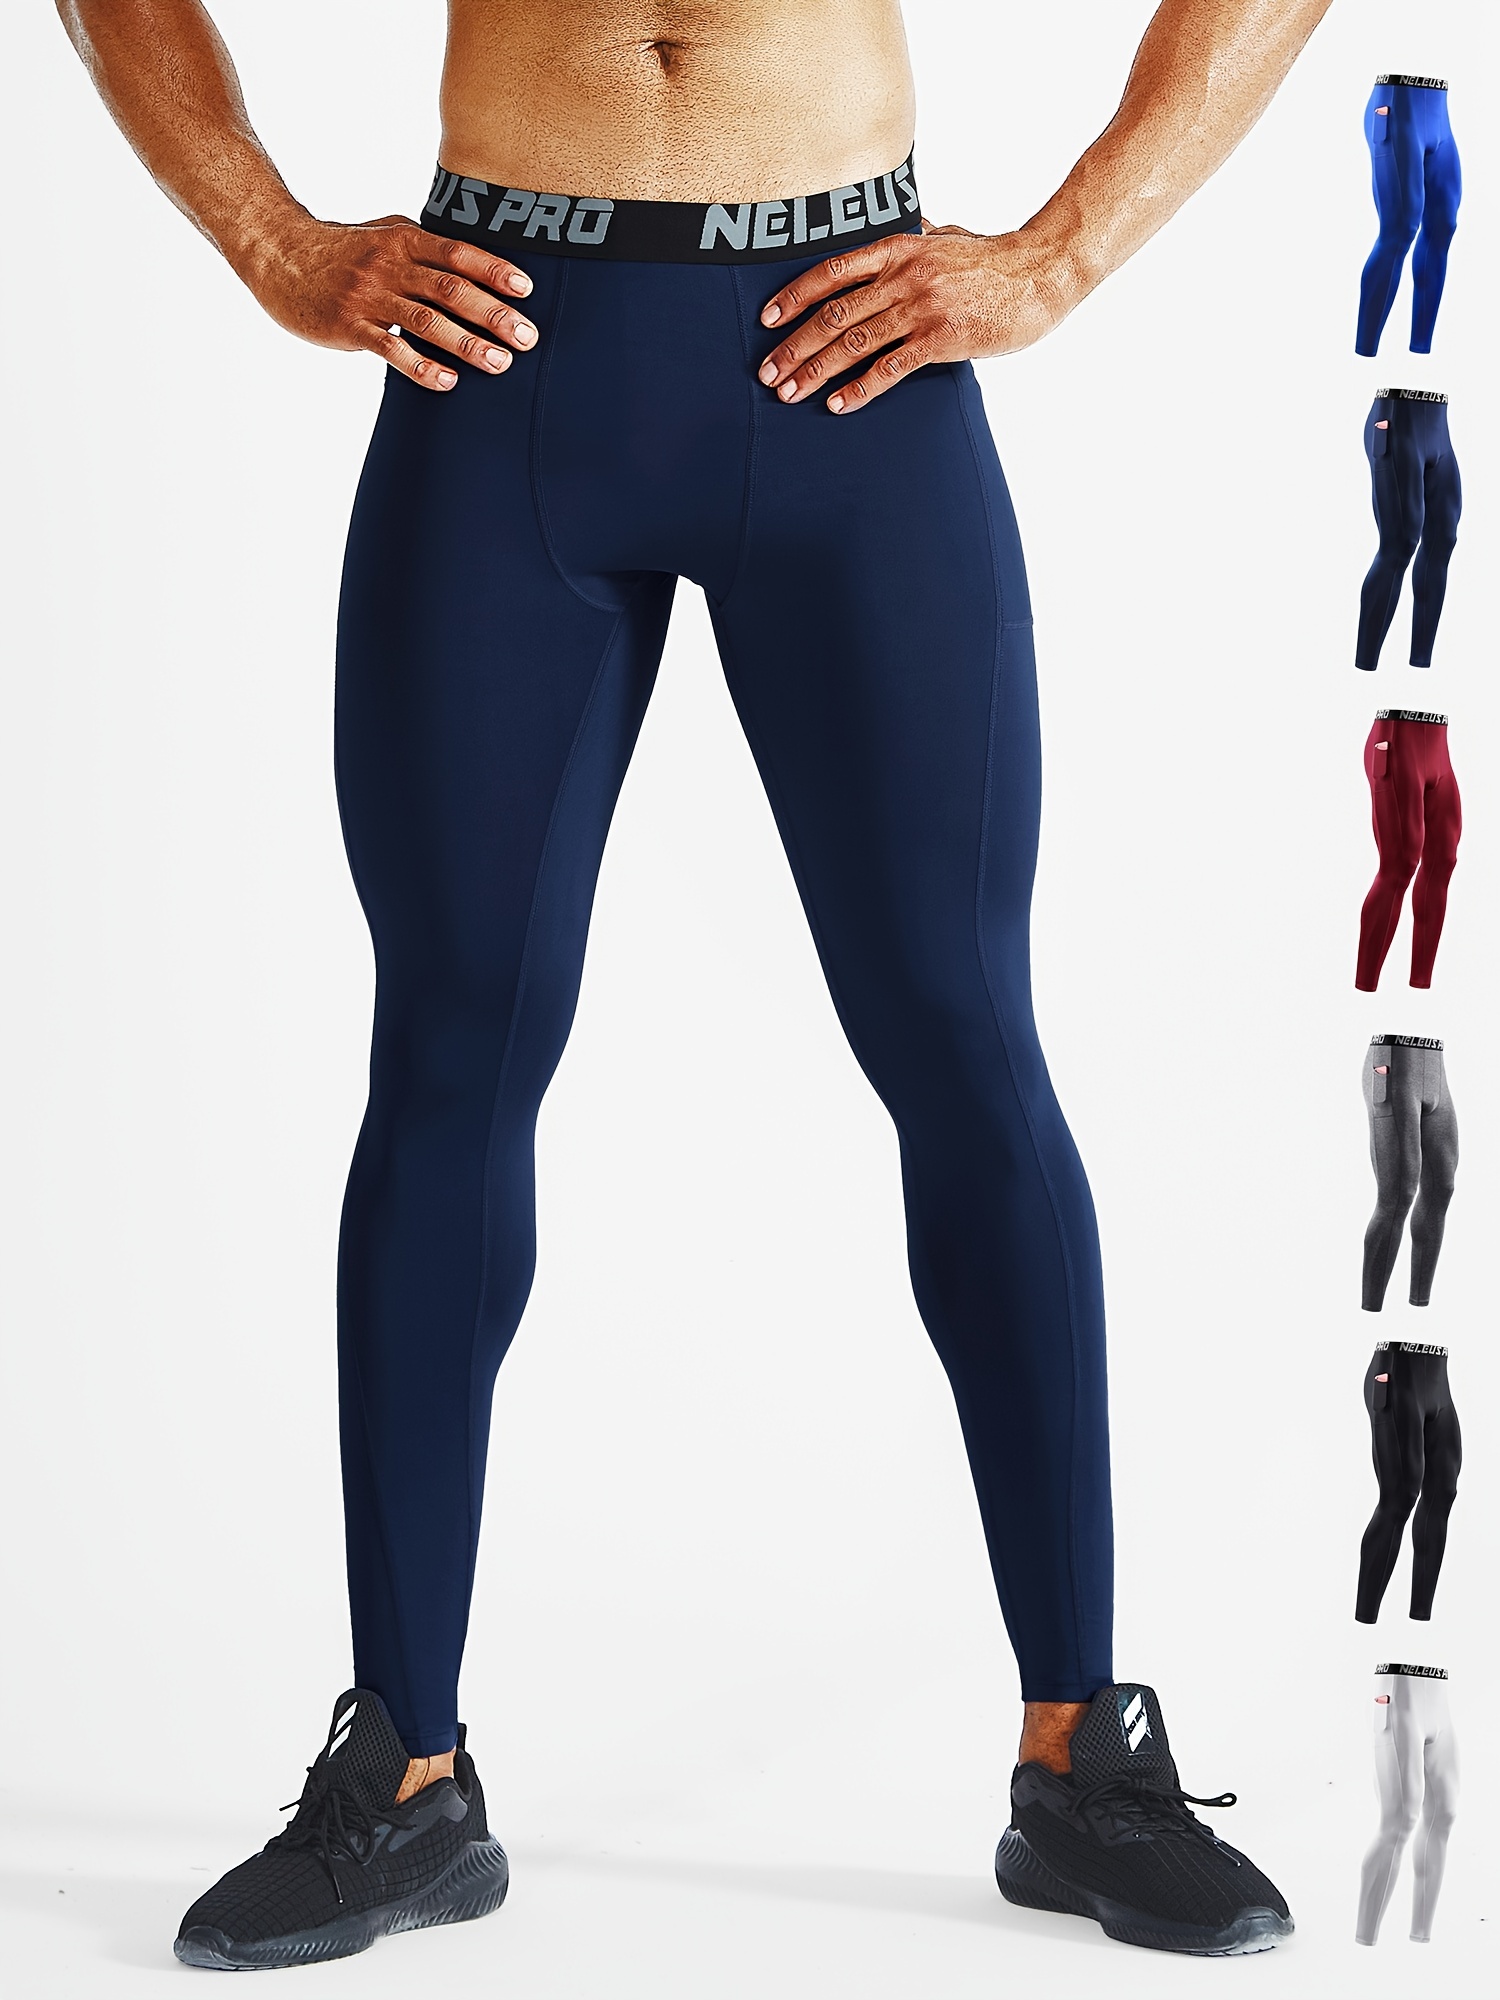 NELEUS Womens High Waist Running Workout Yoga Leggings with  Pockets,Black+Gray,US Size 3XL 